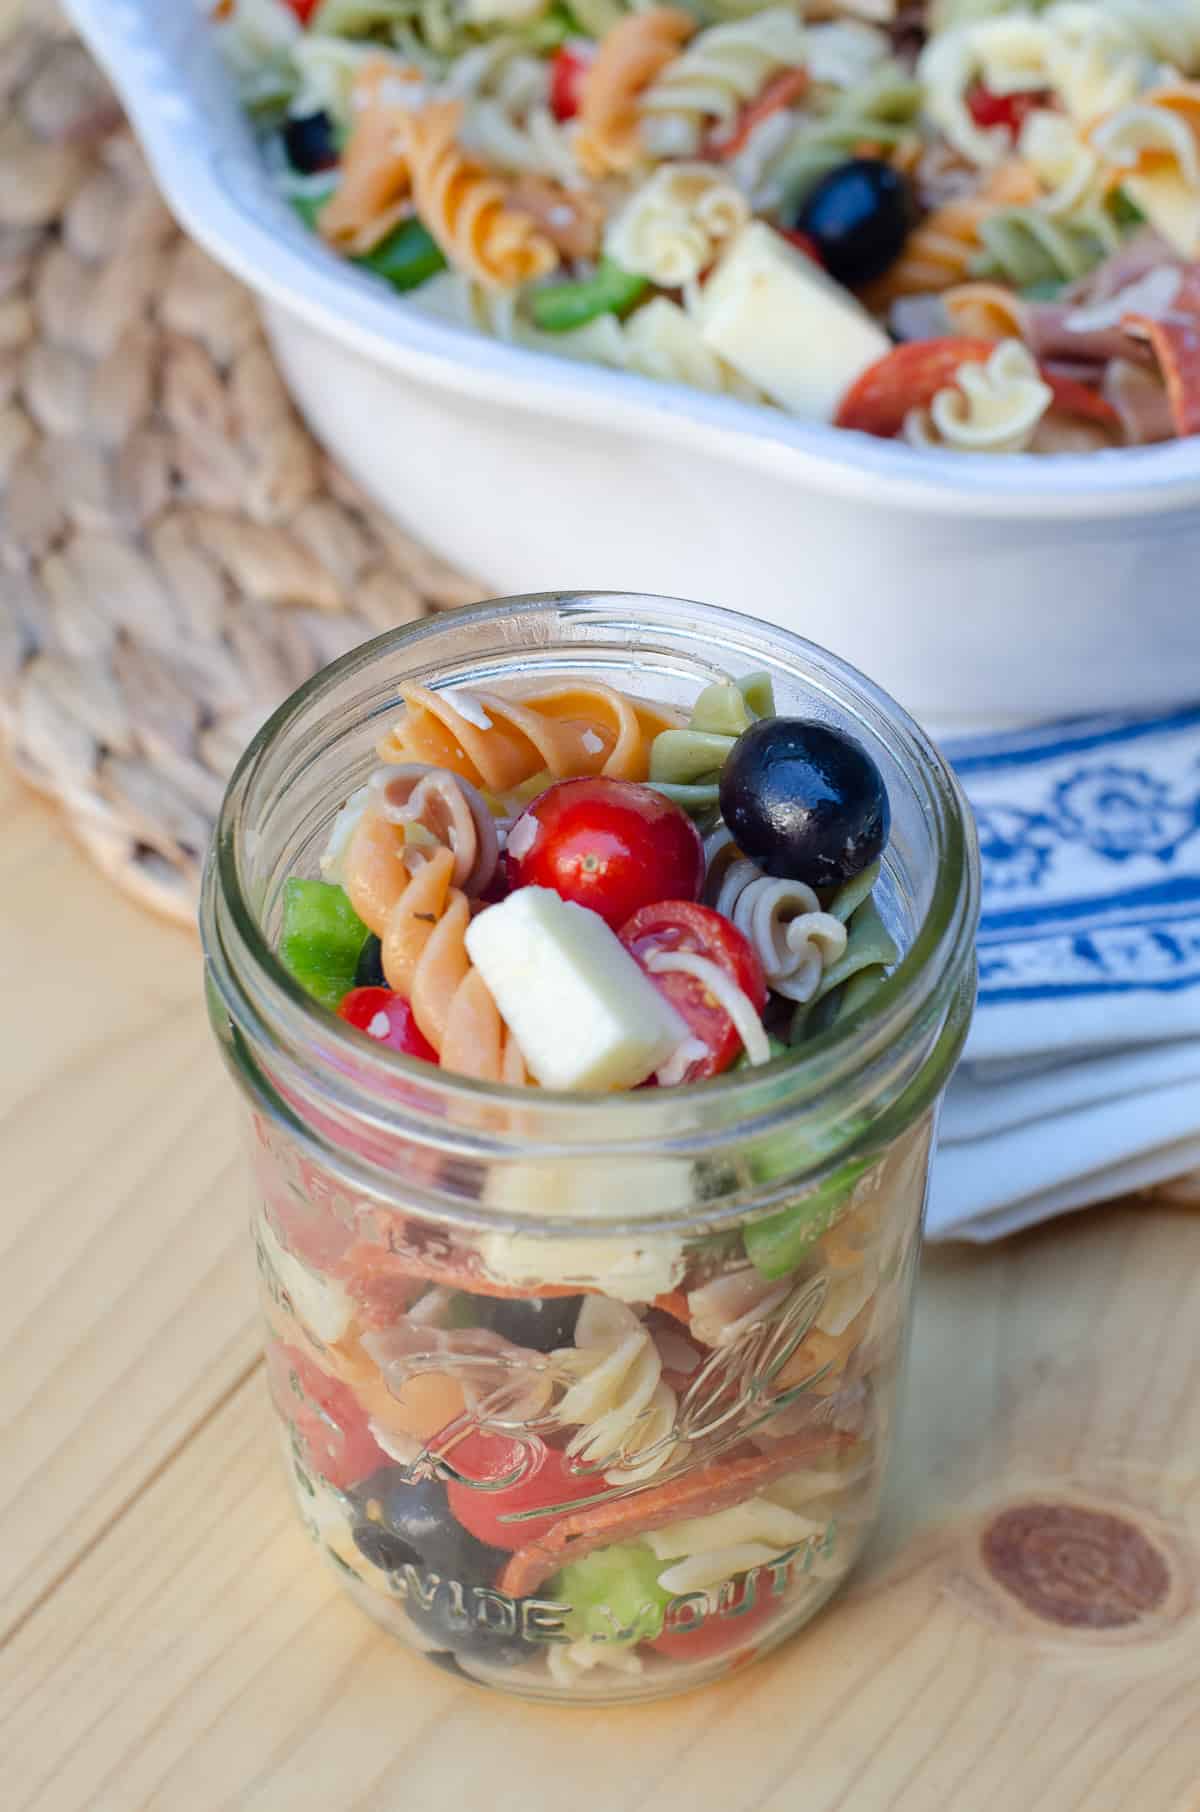 A mason jar filled with pasta salad.